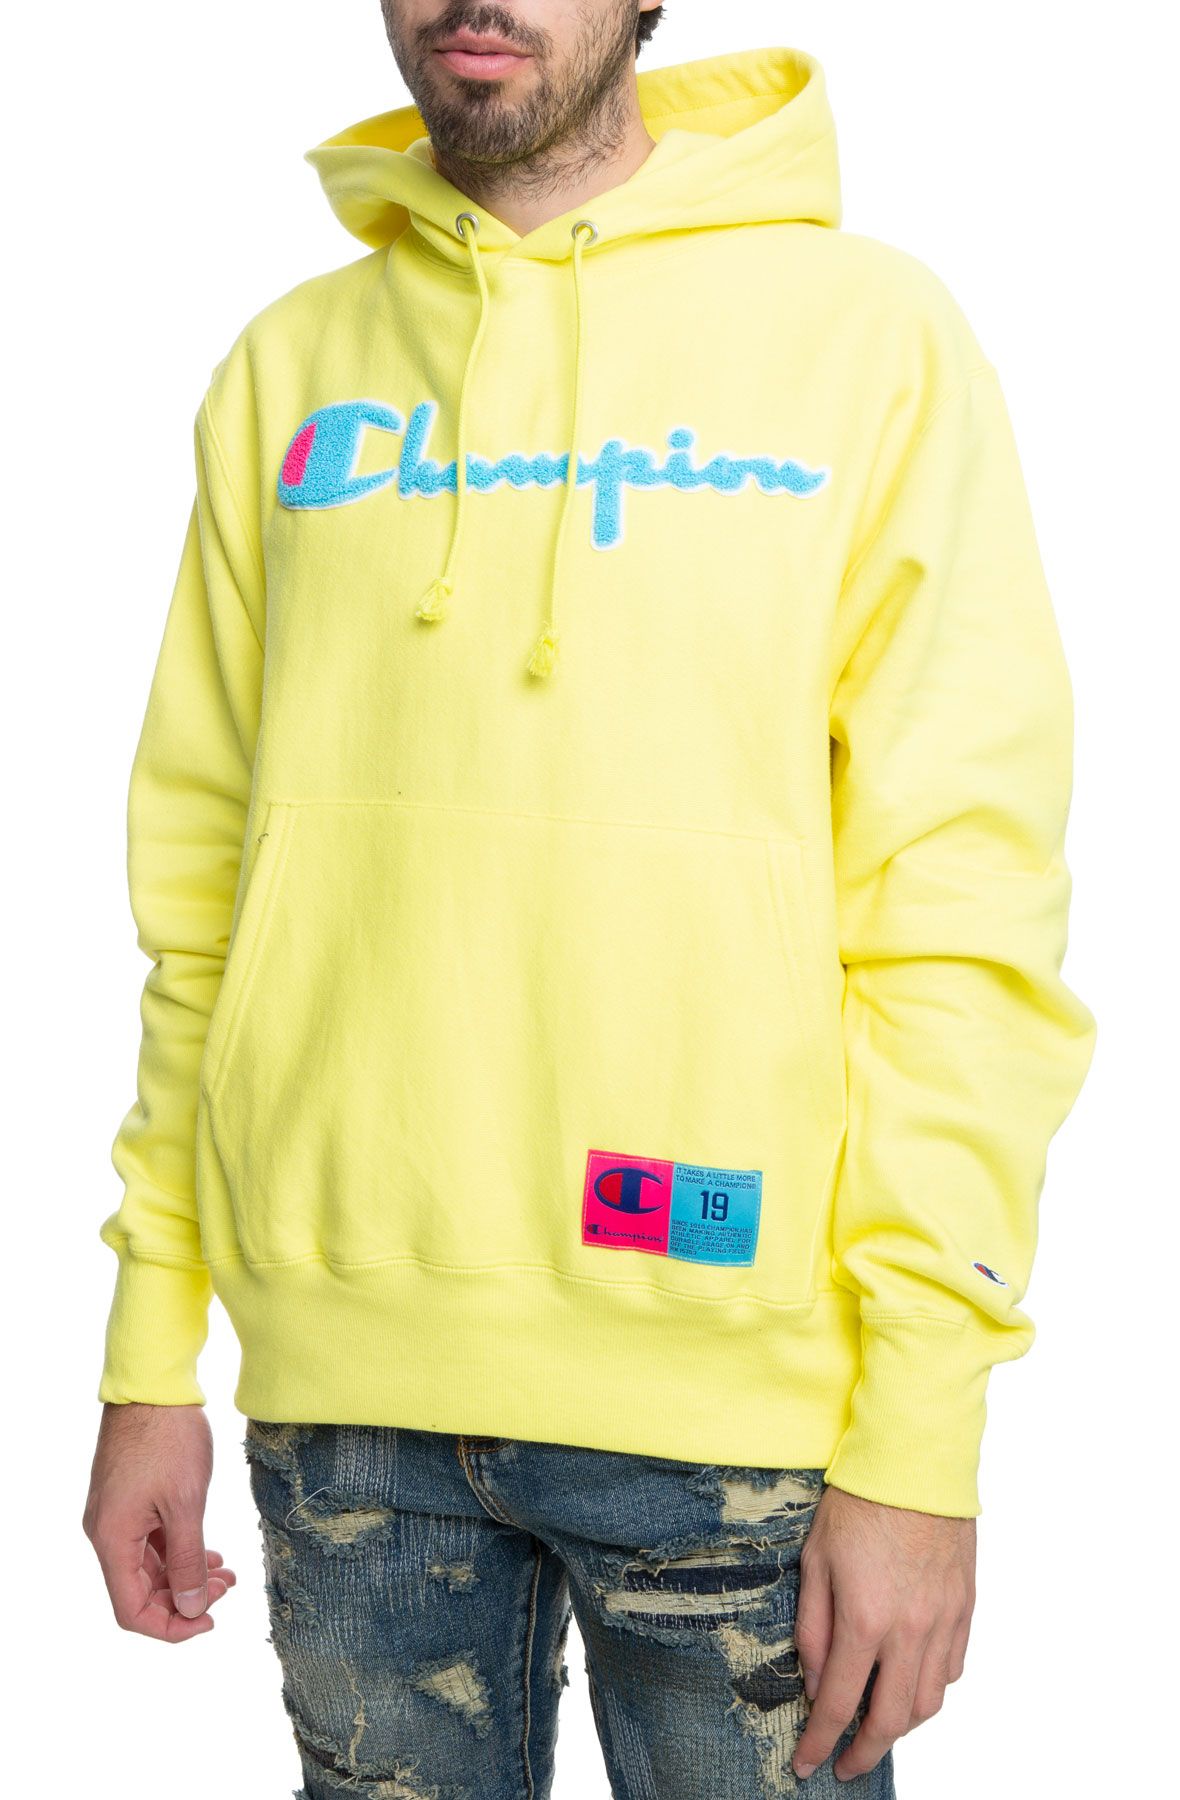 yellow champion script hoodie